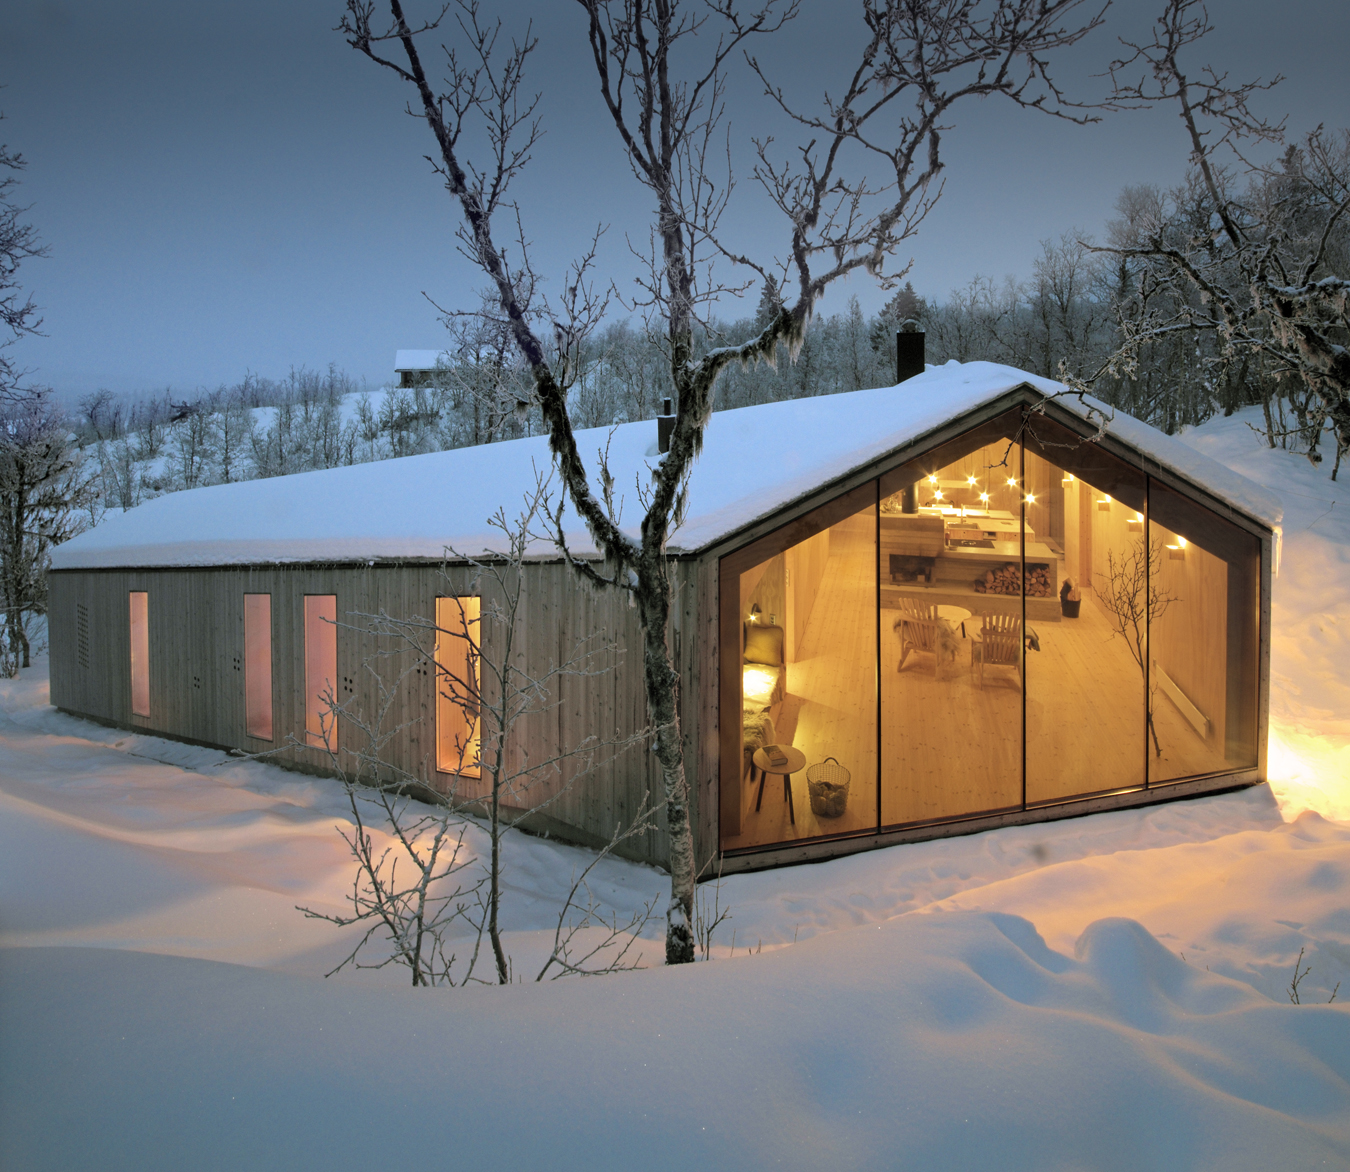 NUVO Winter 2015: Reiulf Ramstad's Architecture